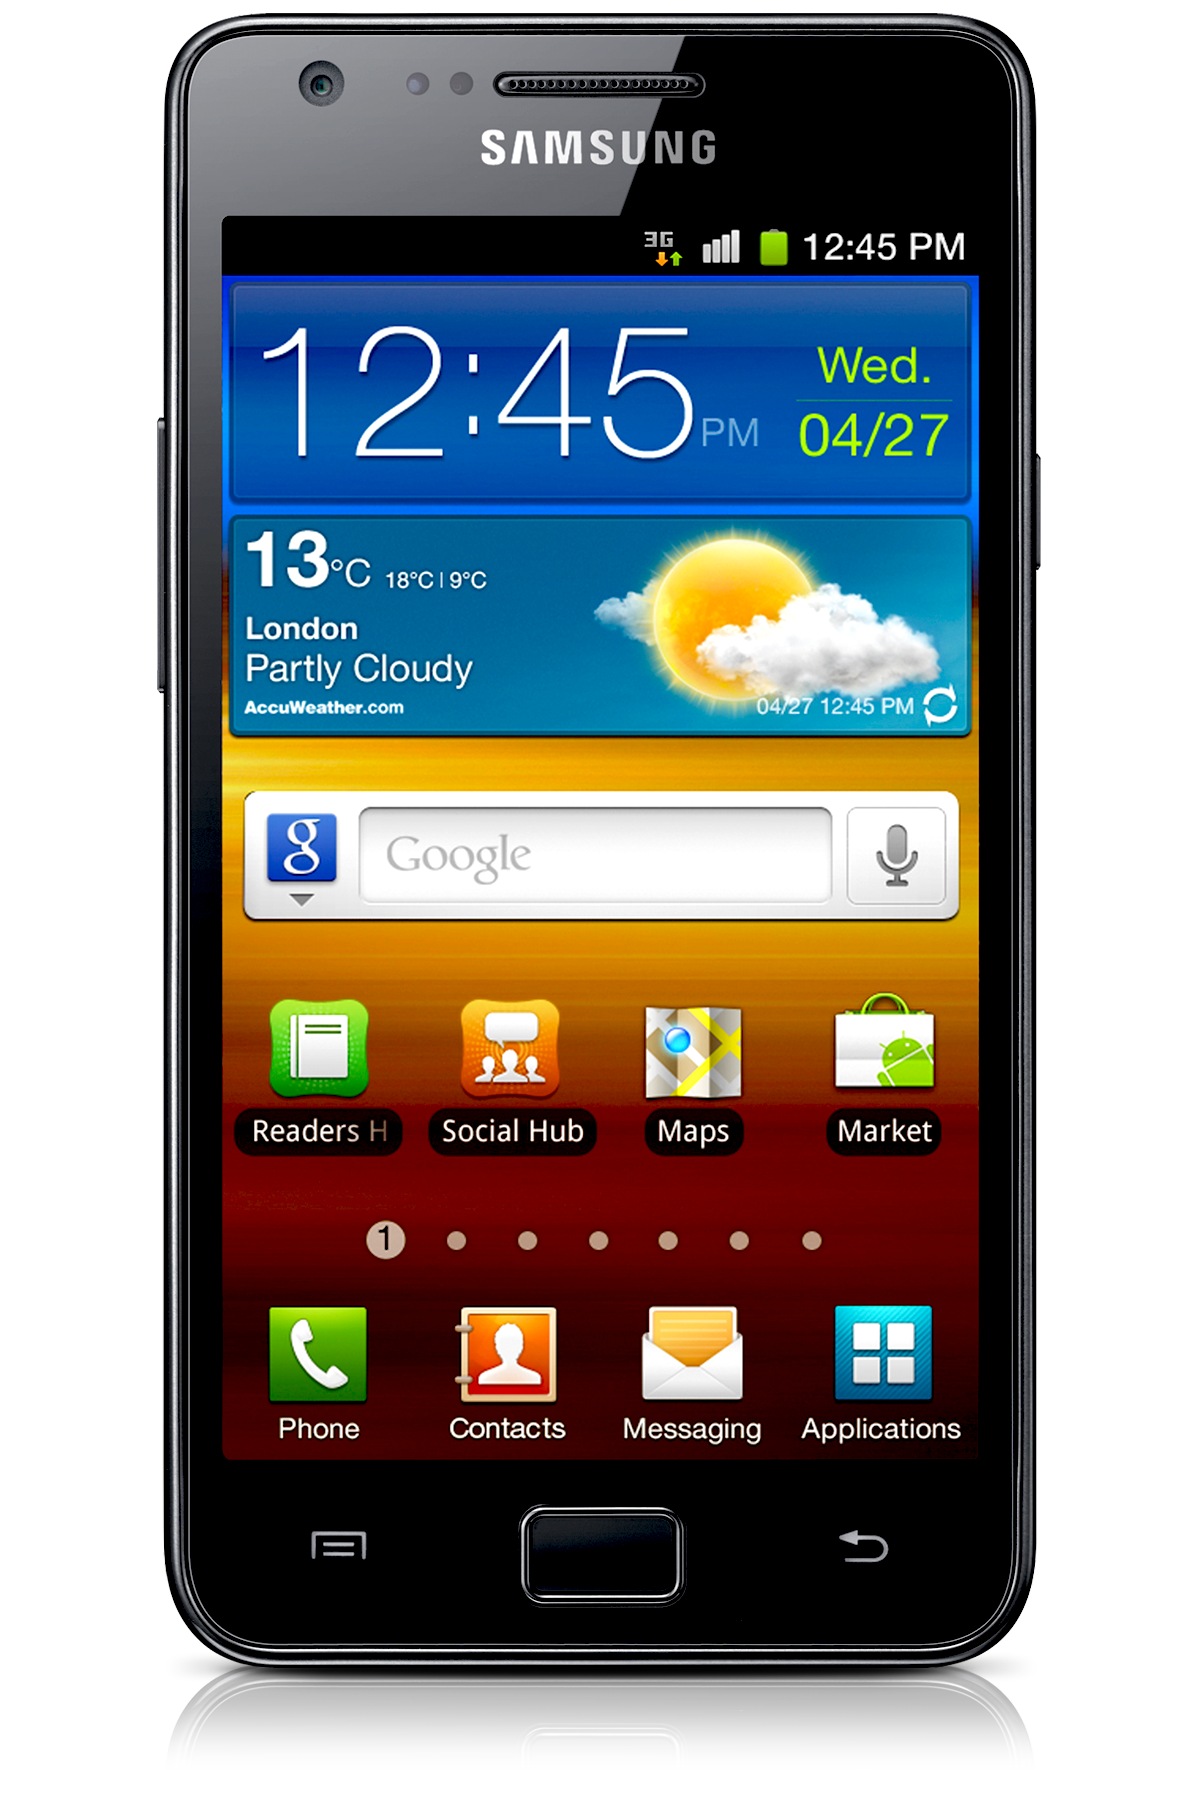 Galaxy S II
i9100 Android